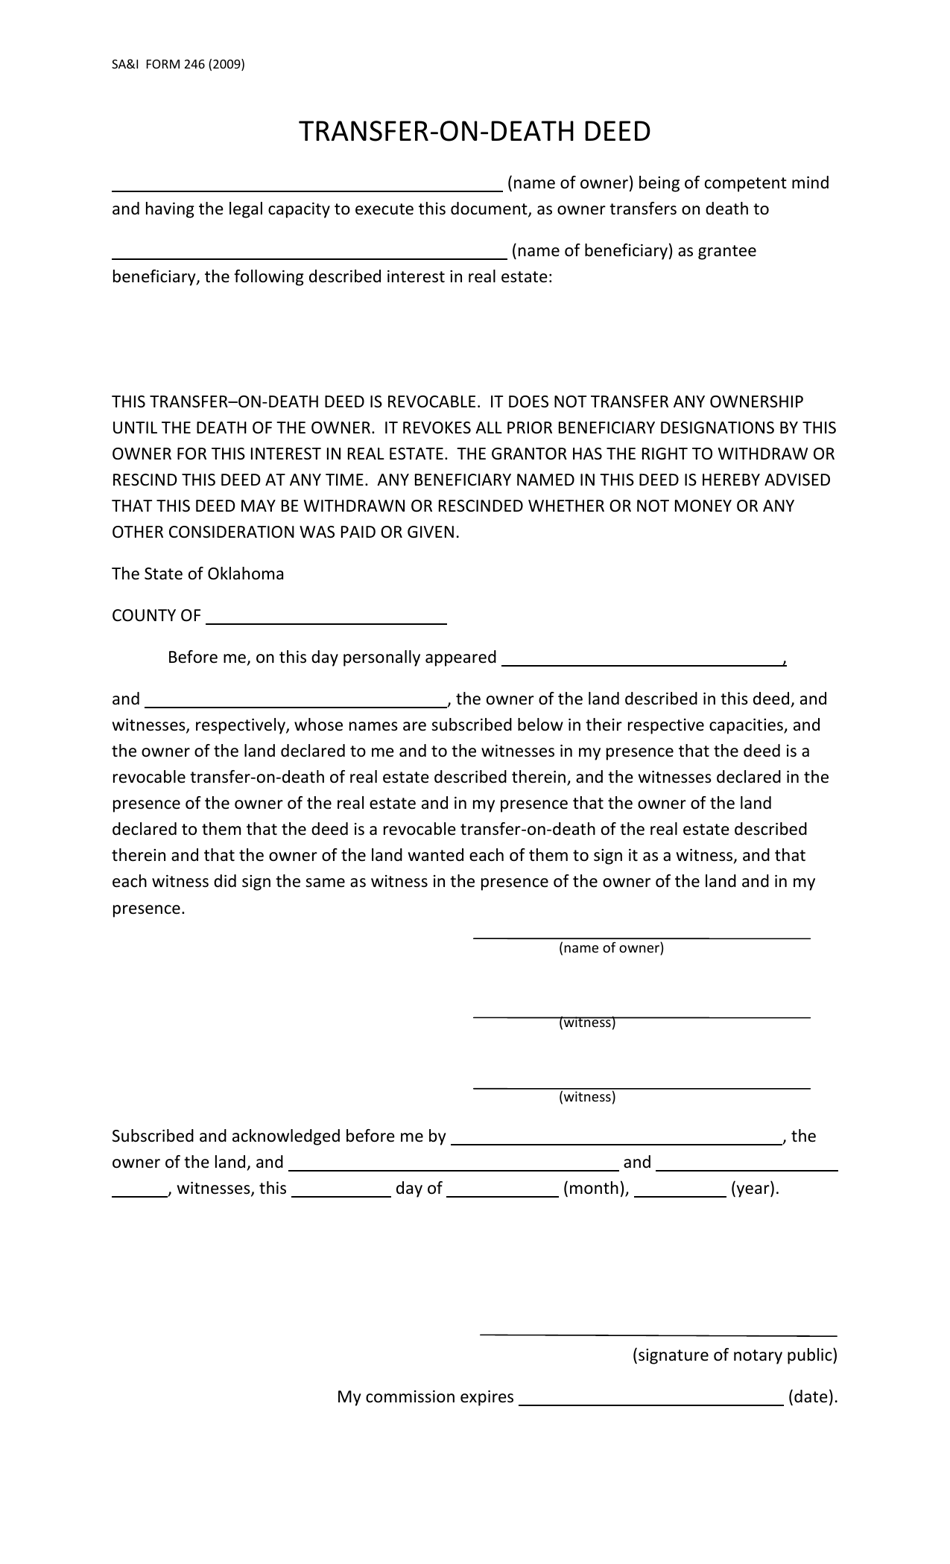 OSAI Form 246 Transfer-On-Death Deed - Oklahoma, Page 1